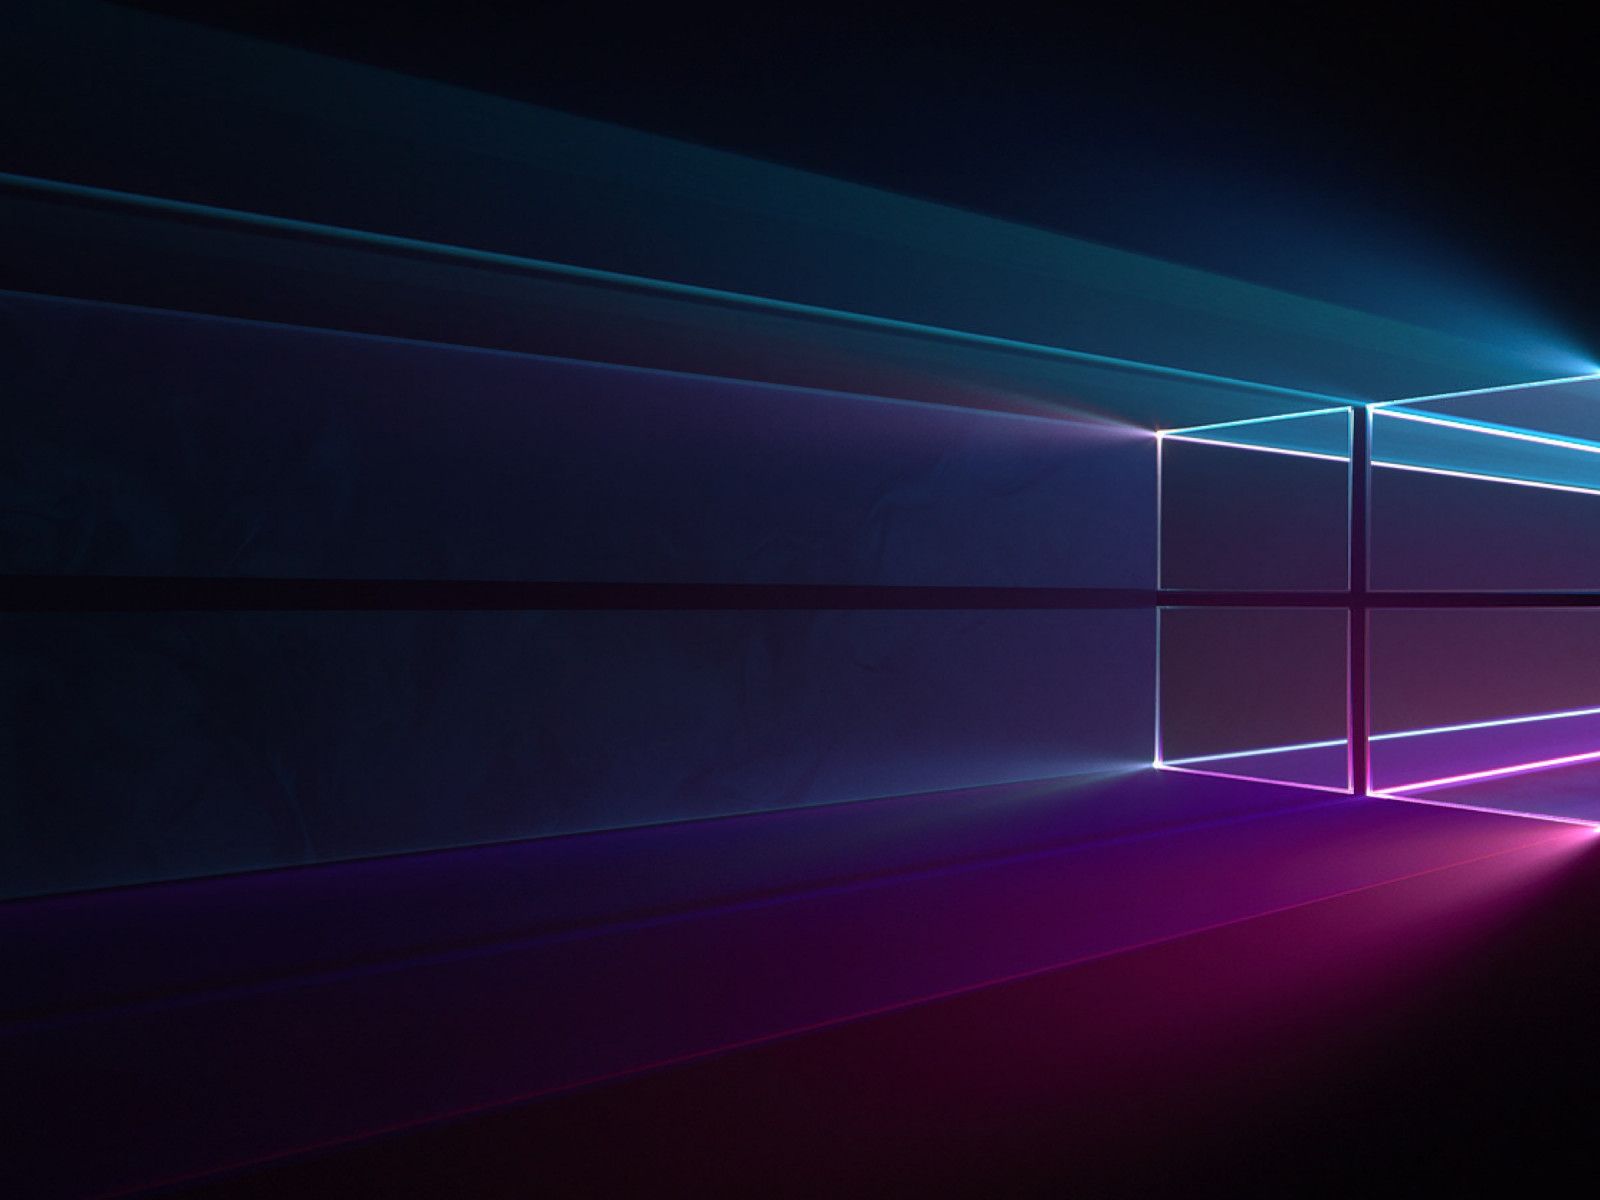 10 Free Windows Desktop Backgrounds Light | Images and Photos finder